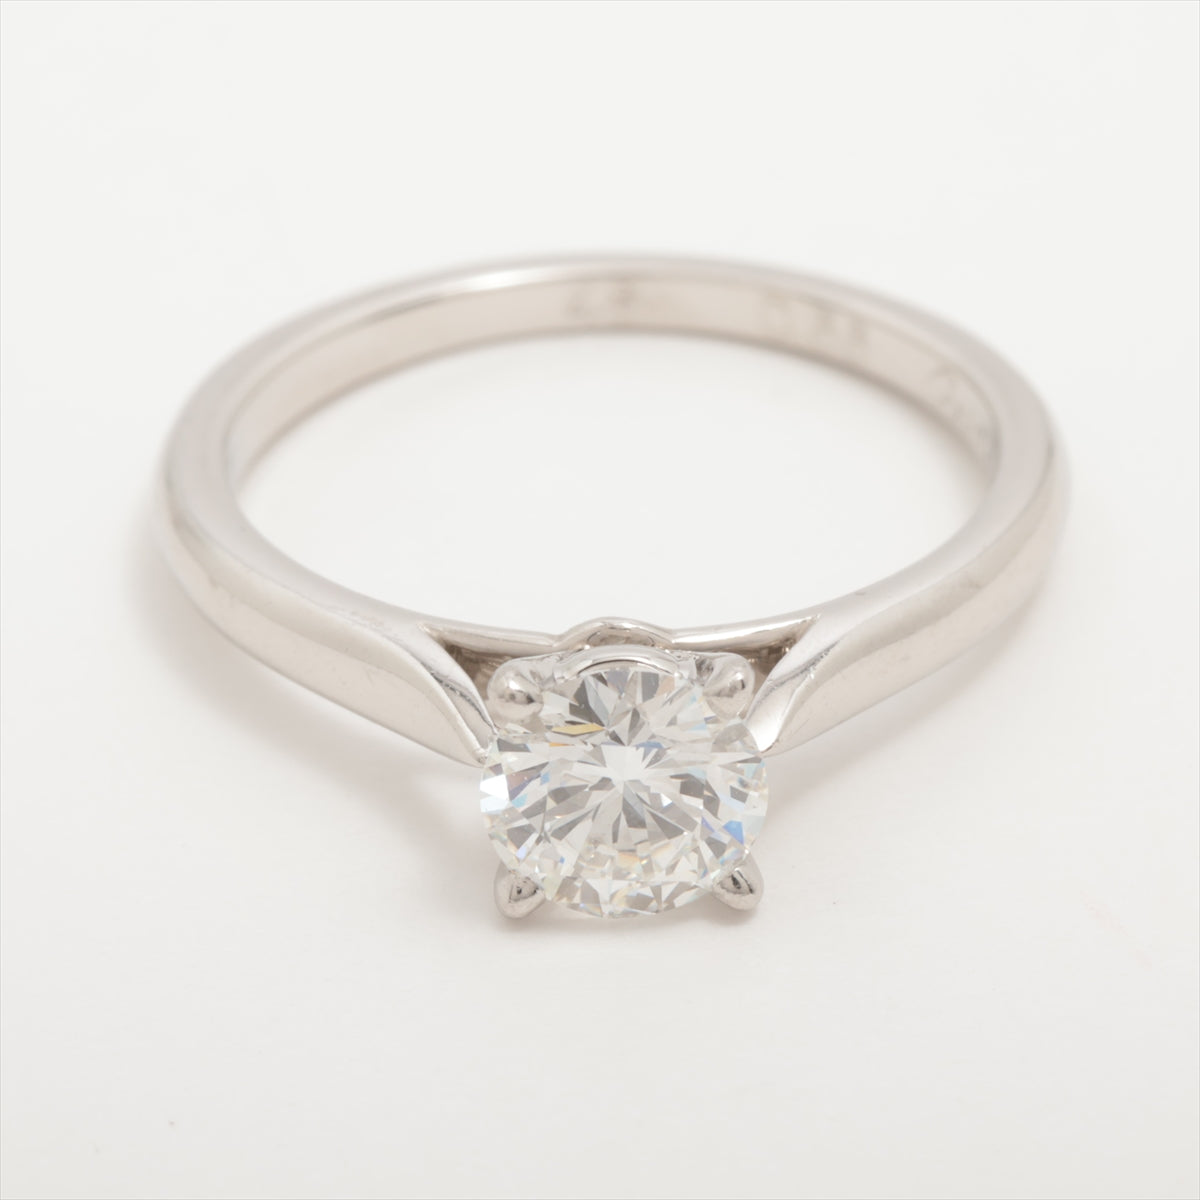 Cartier Solitaire 1895 diamond rings Pt950 3.0g 0.56 48